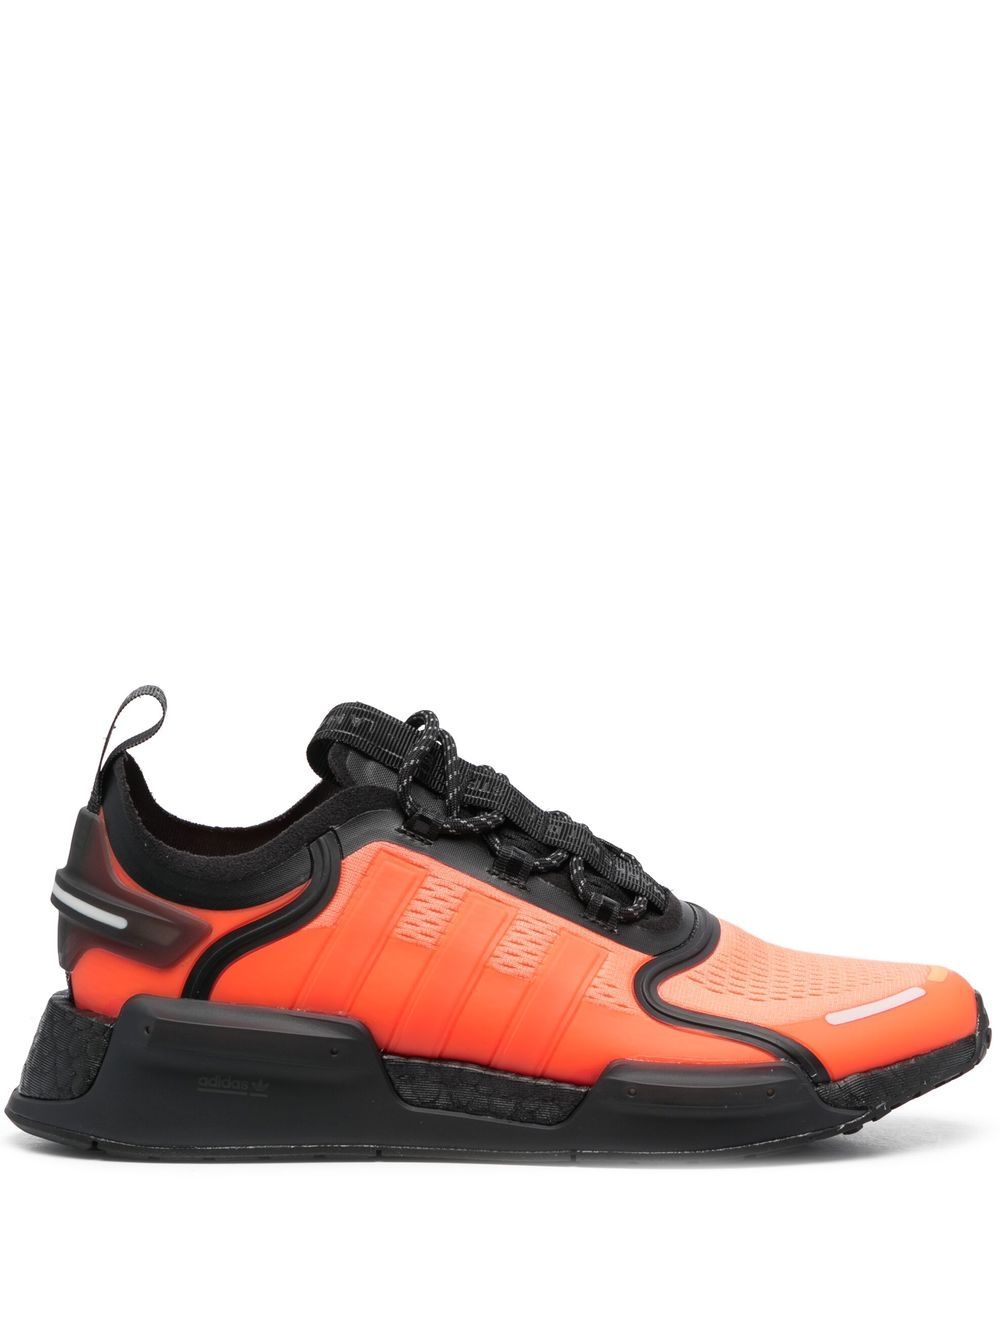 adidas NMD_R1 V3 sneakers - Orange von adidas